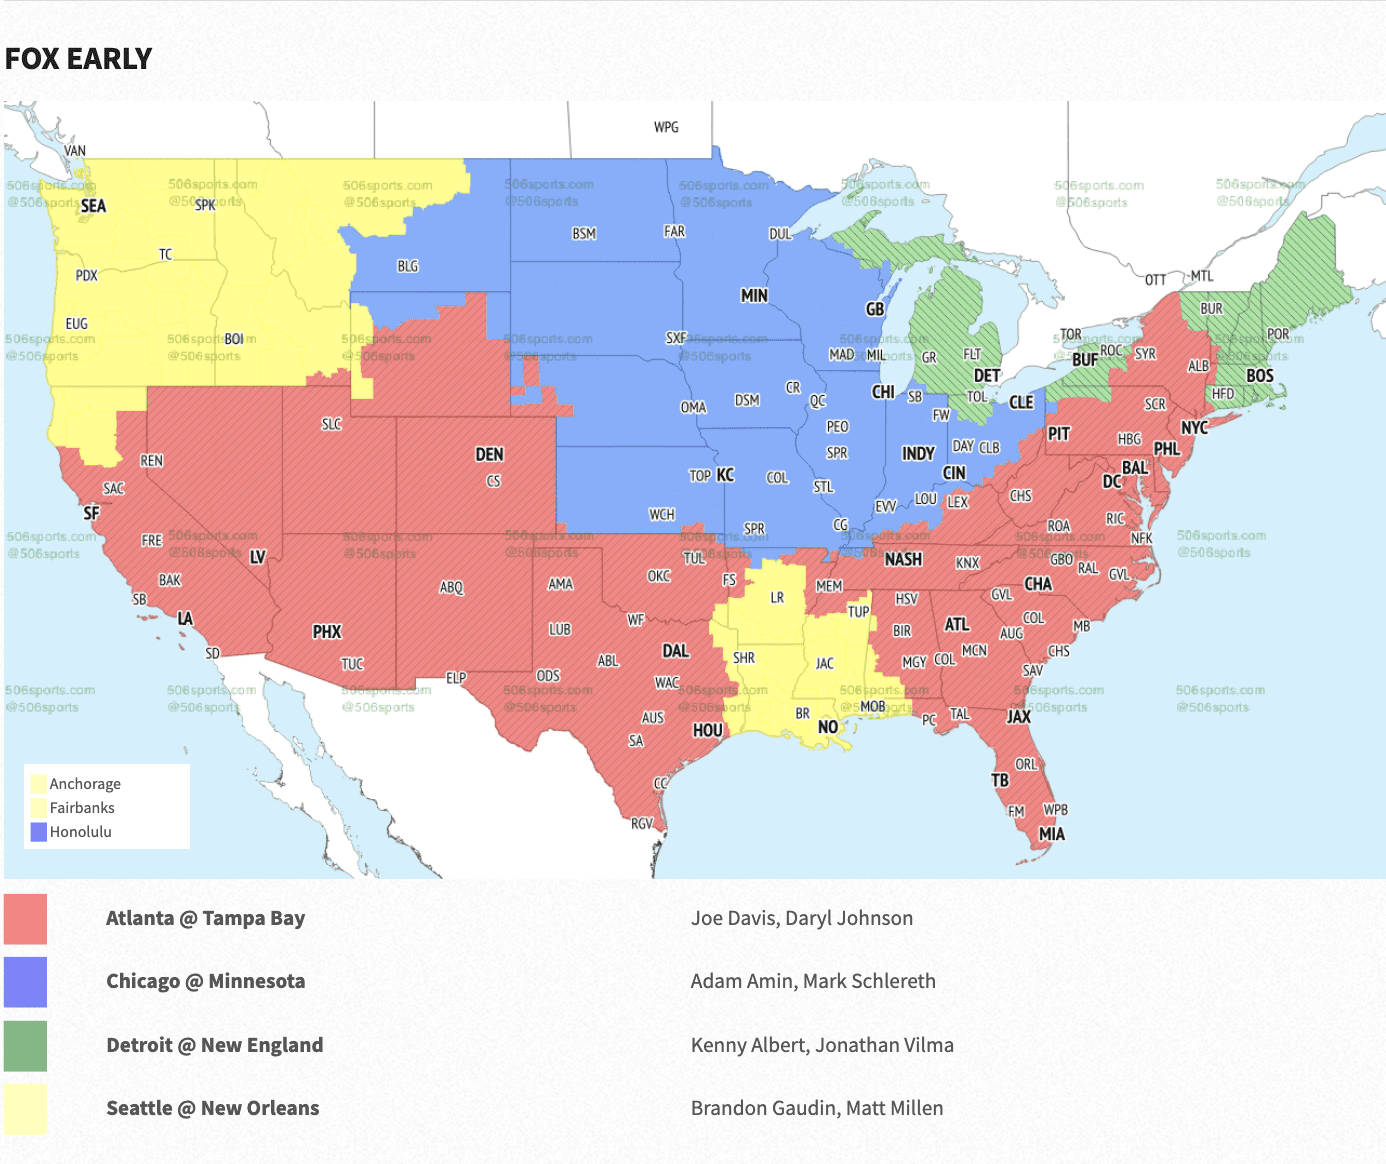 NFL Week 5 Coverage Maps